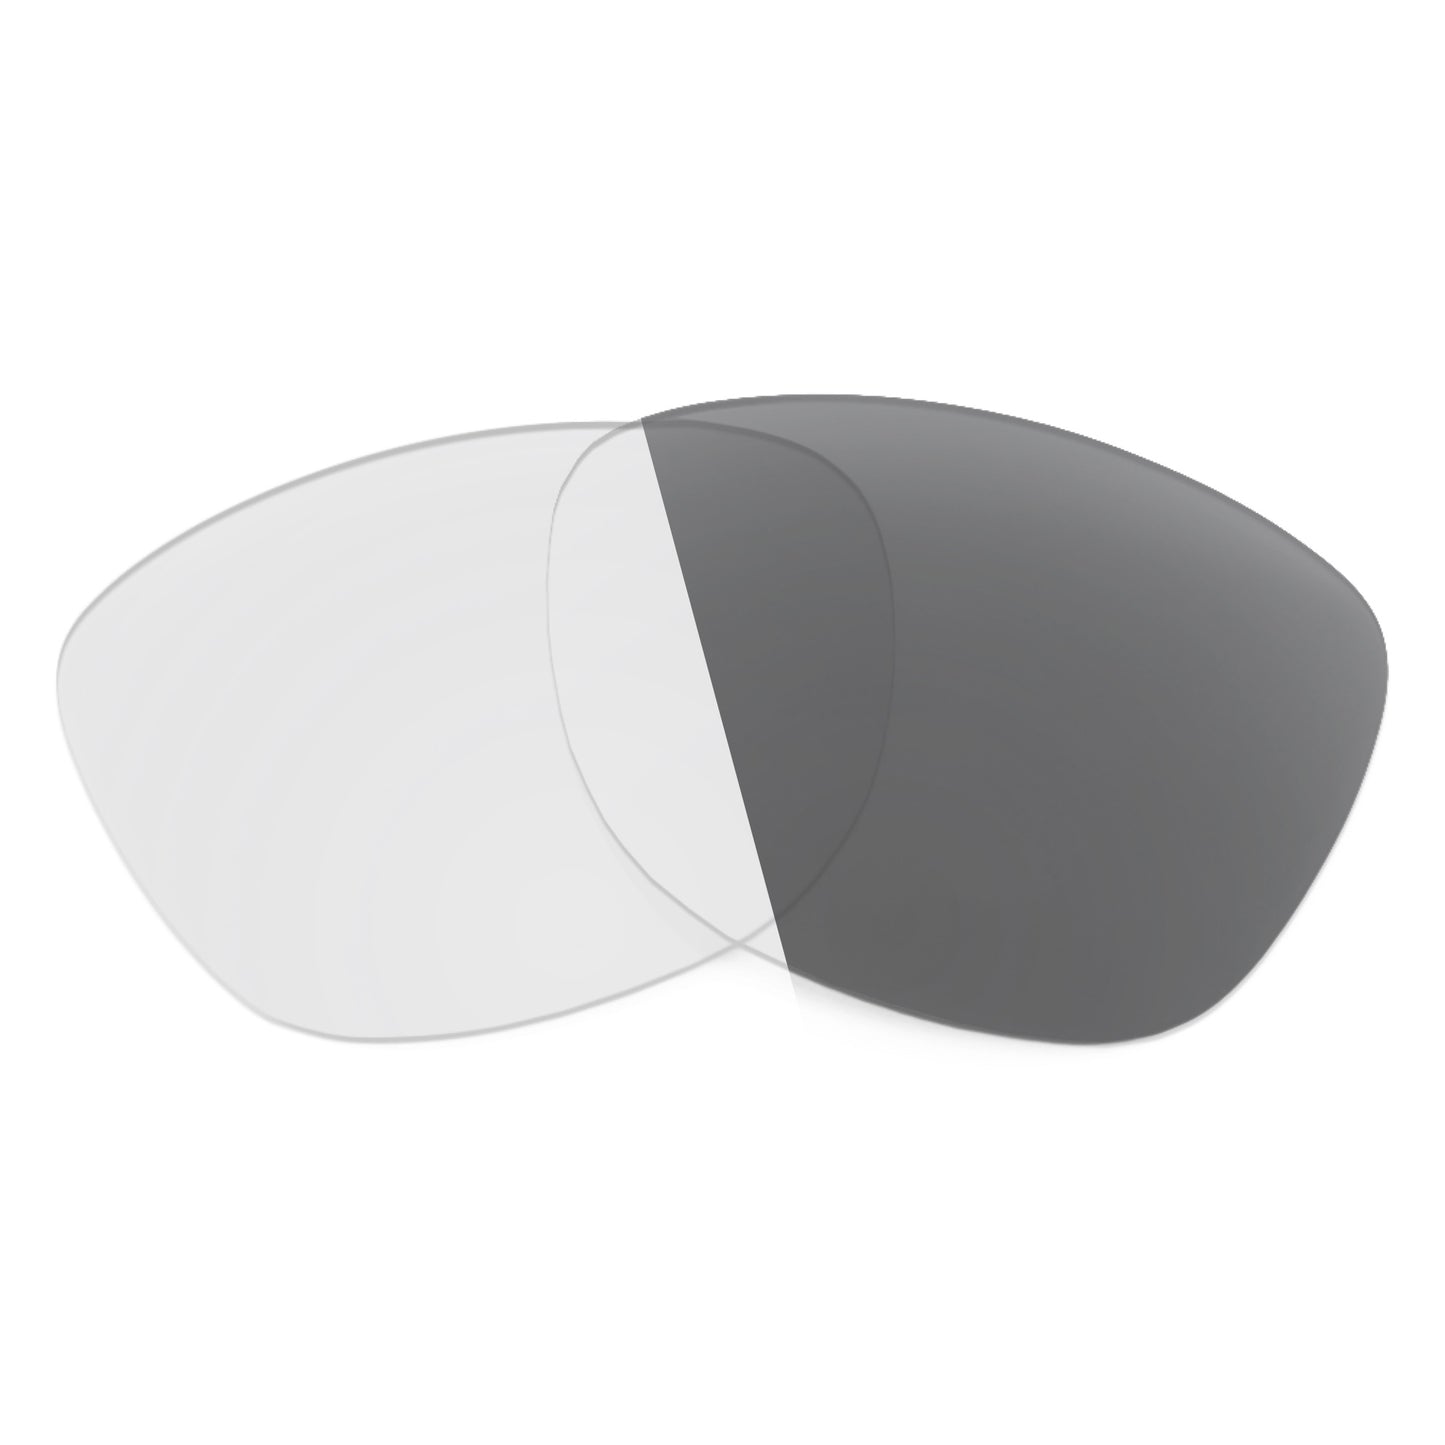 Revant replacement lenses for Costa Caldera Non-Polarized Adapt Gray Photochromic